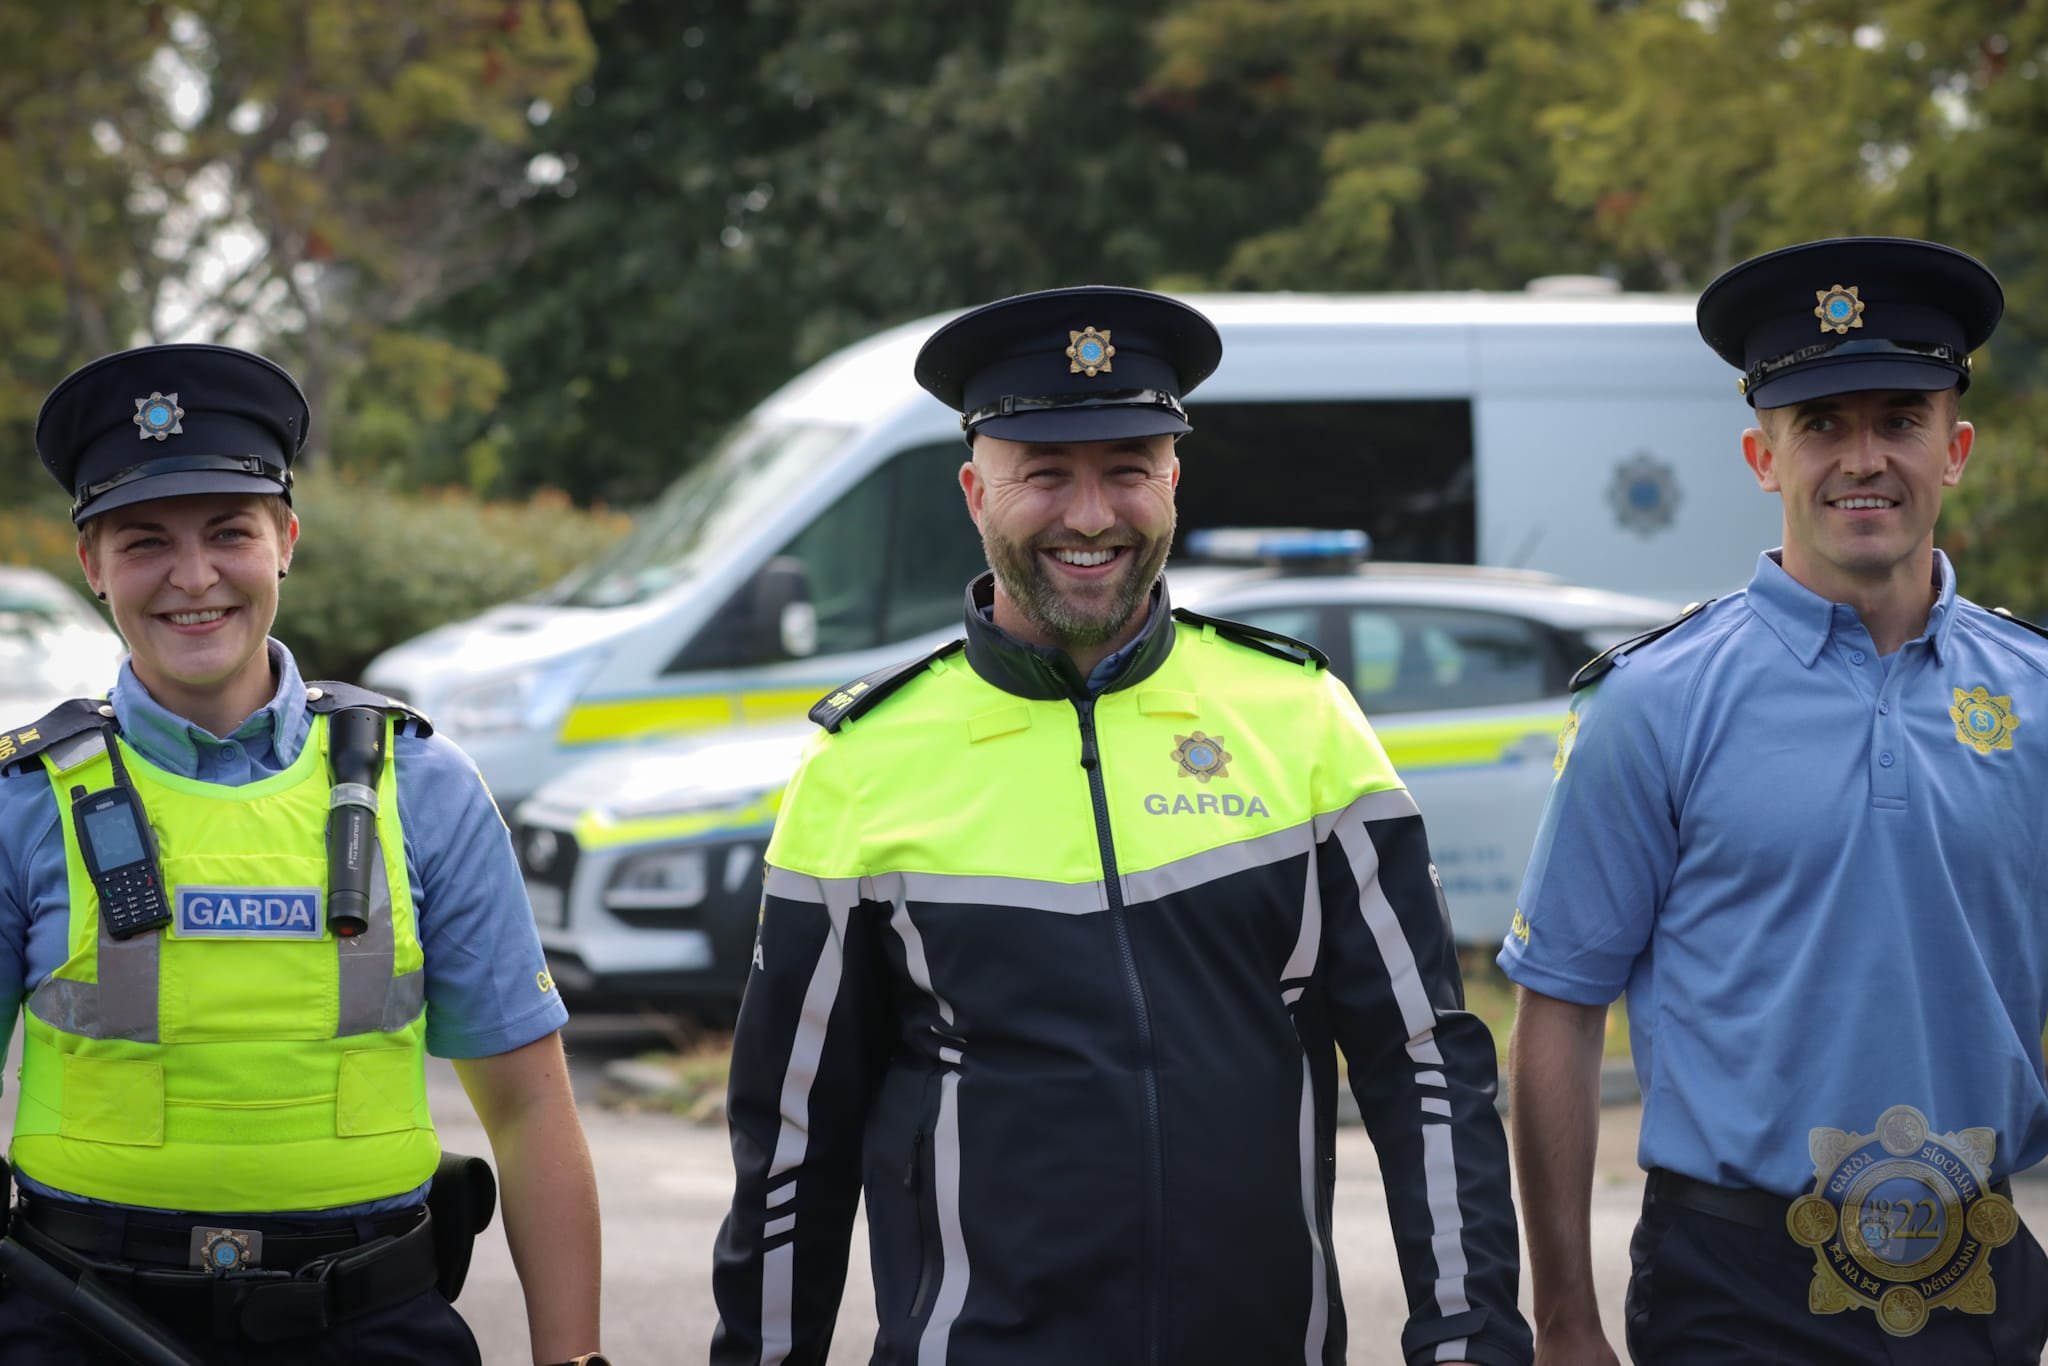 New Garda uniform launched in Ireland